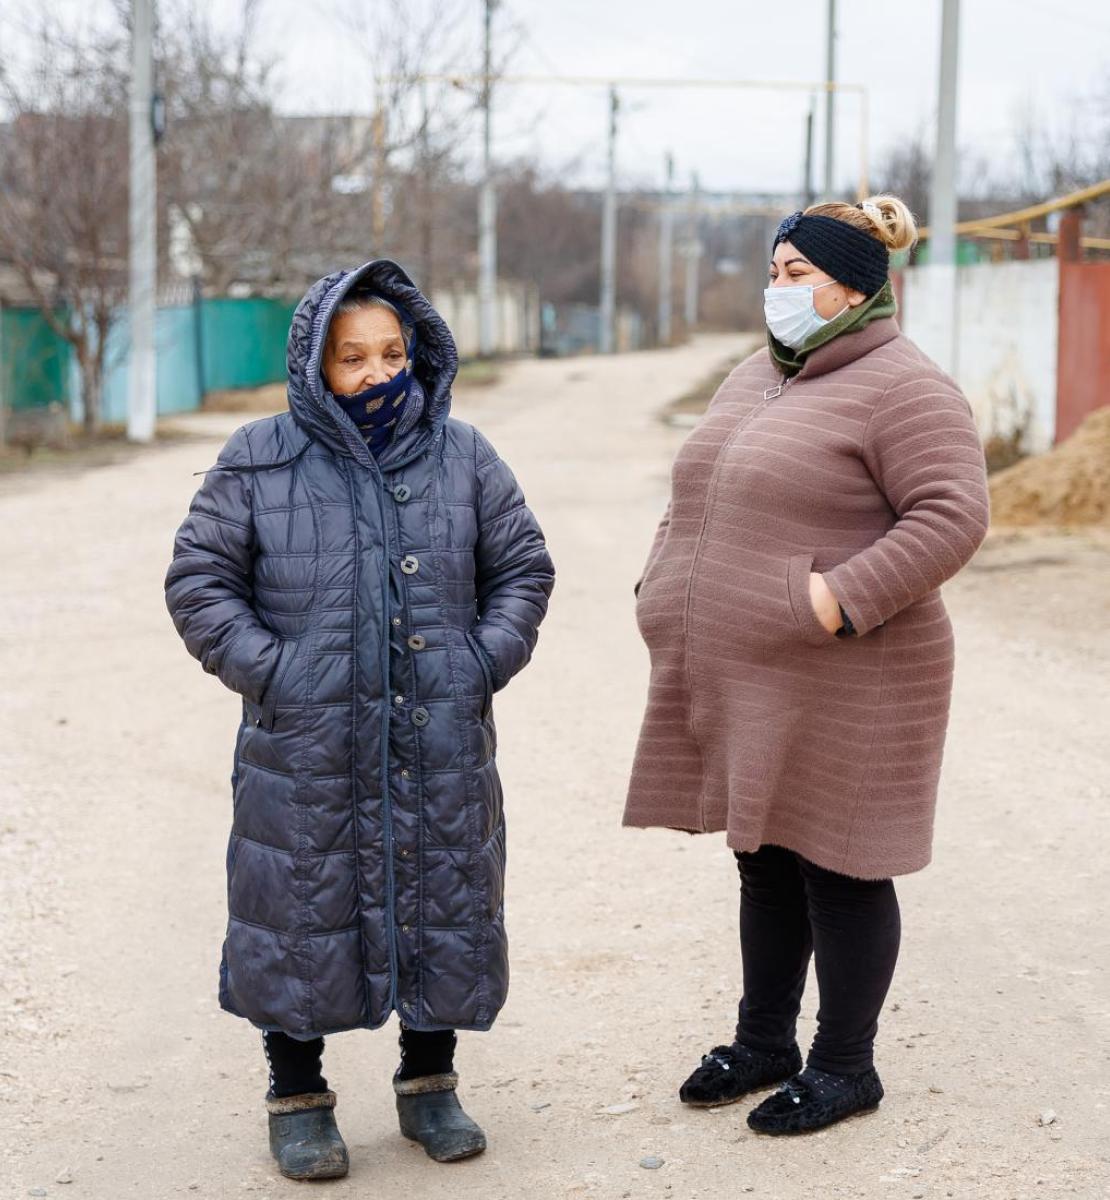 Two women in winter coats are talking on the street. 